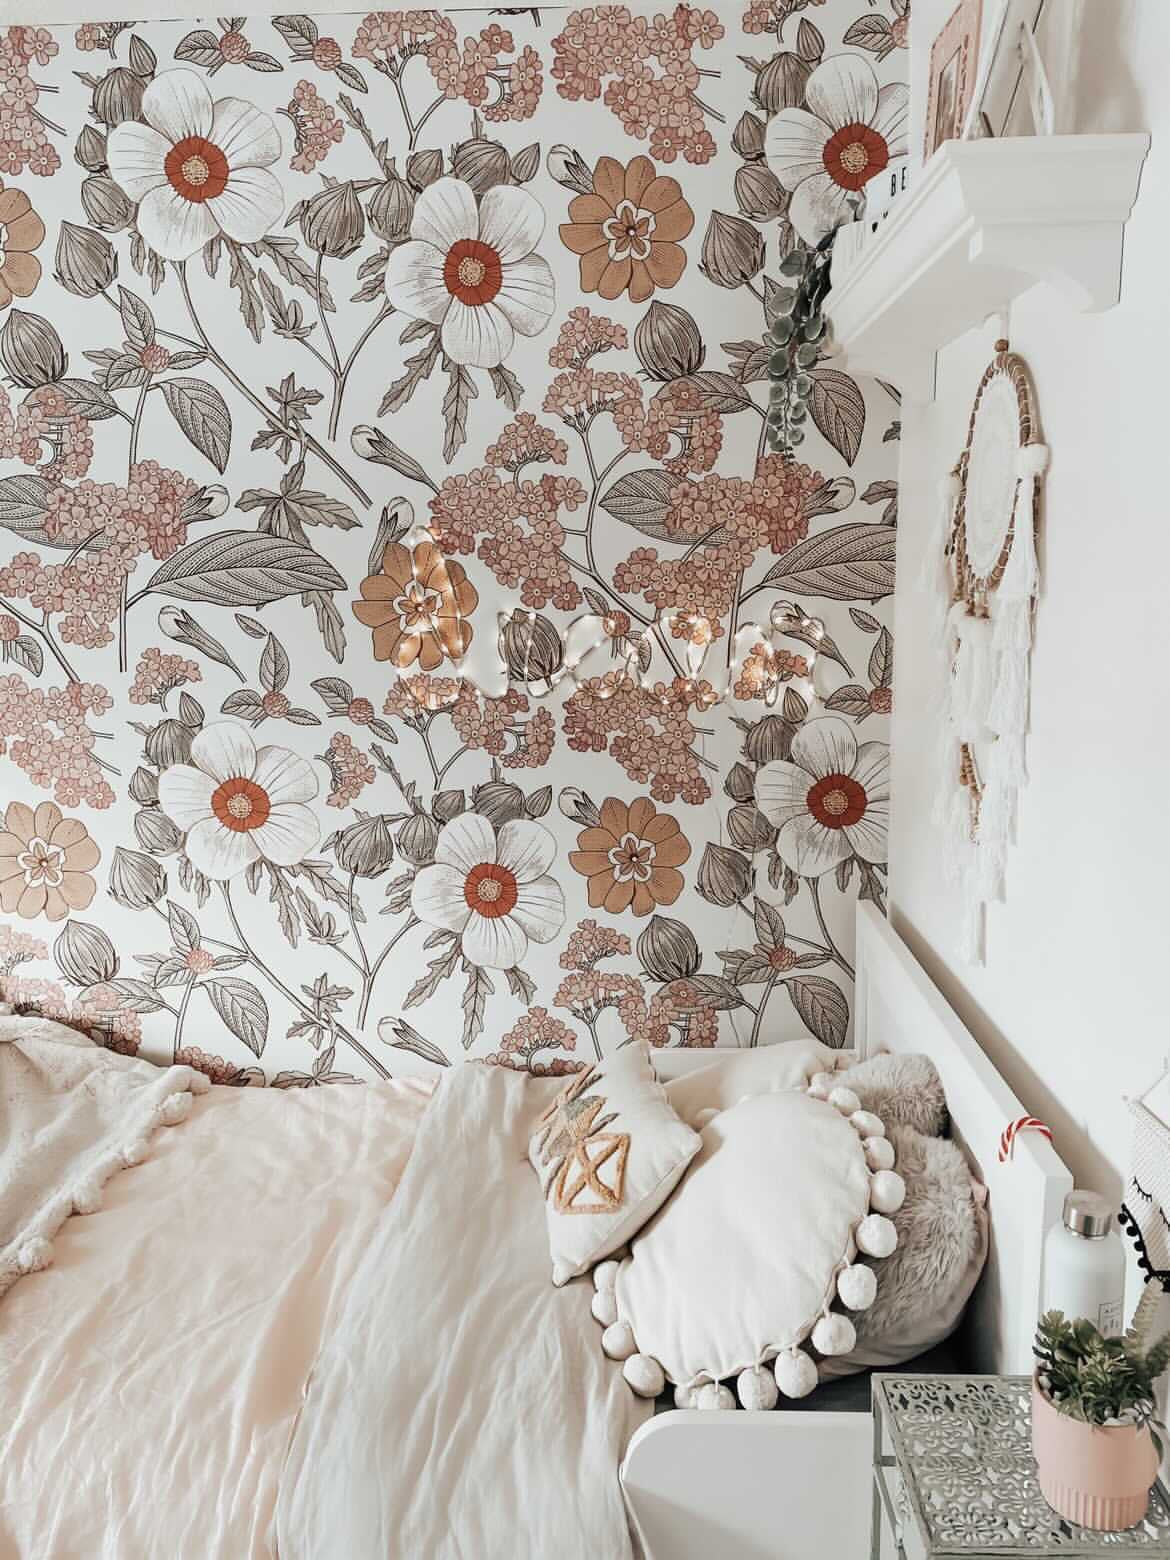 Peel and stick. Peel and stick wallpaper. Removable wallpaper. Modern Wallpaper. Floral Wallpaper. Baby Wallpaper